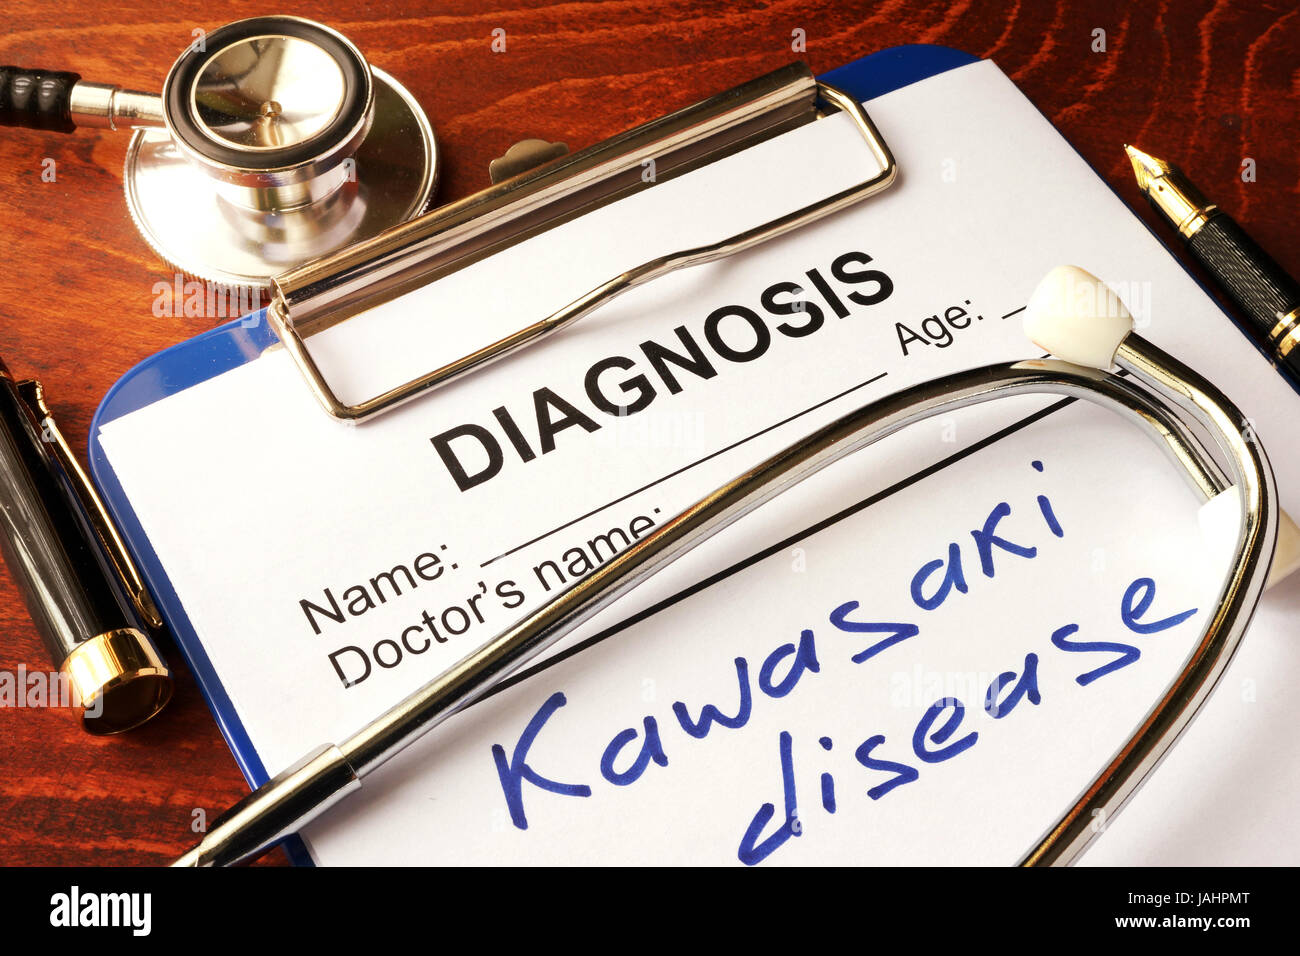 Kawasaki disease written in a document on a table. Stock Photo